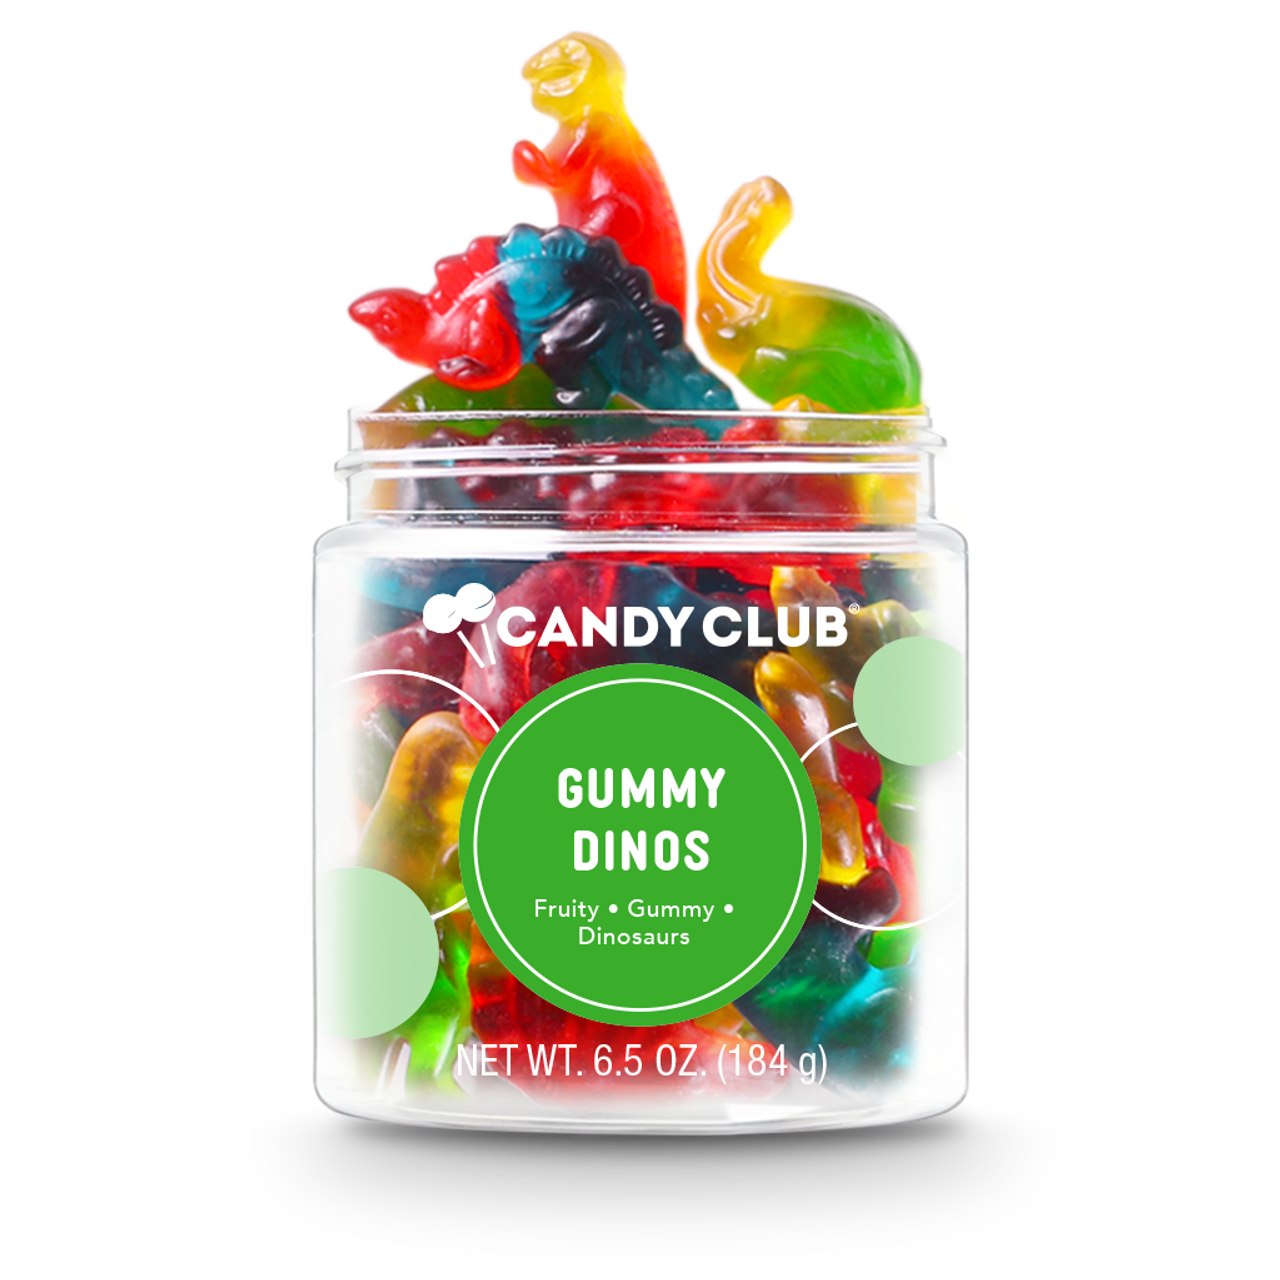 Gummies Gummy Butterfly Gummy Candy Candy Box Candy Cart 